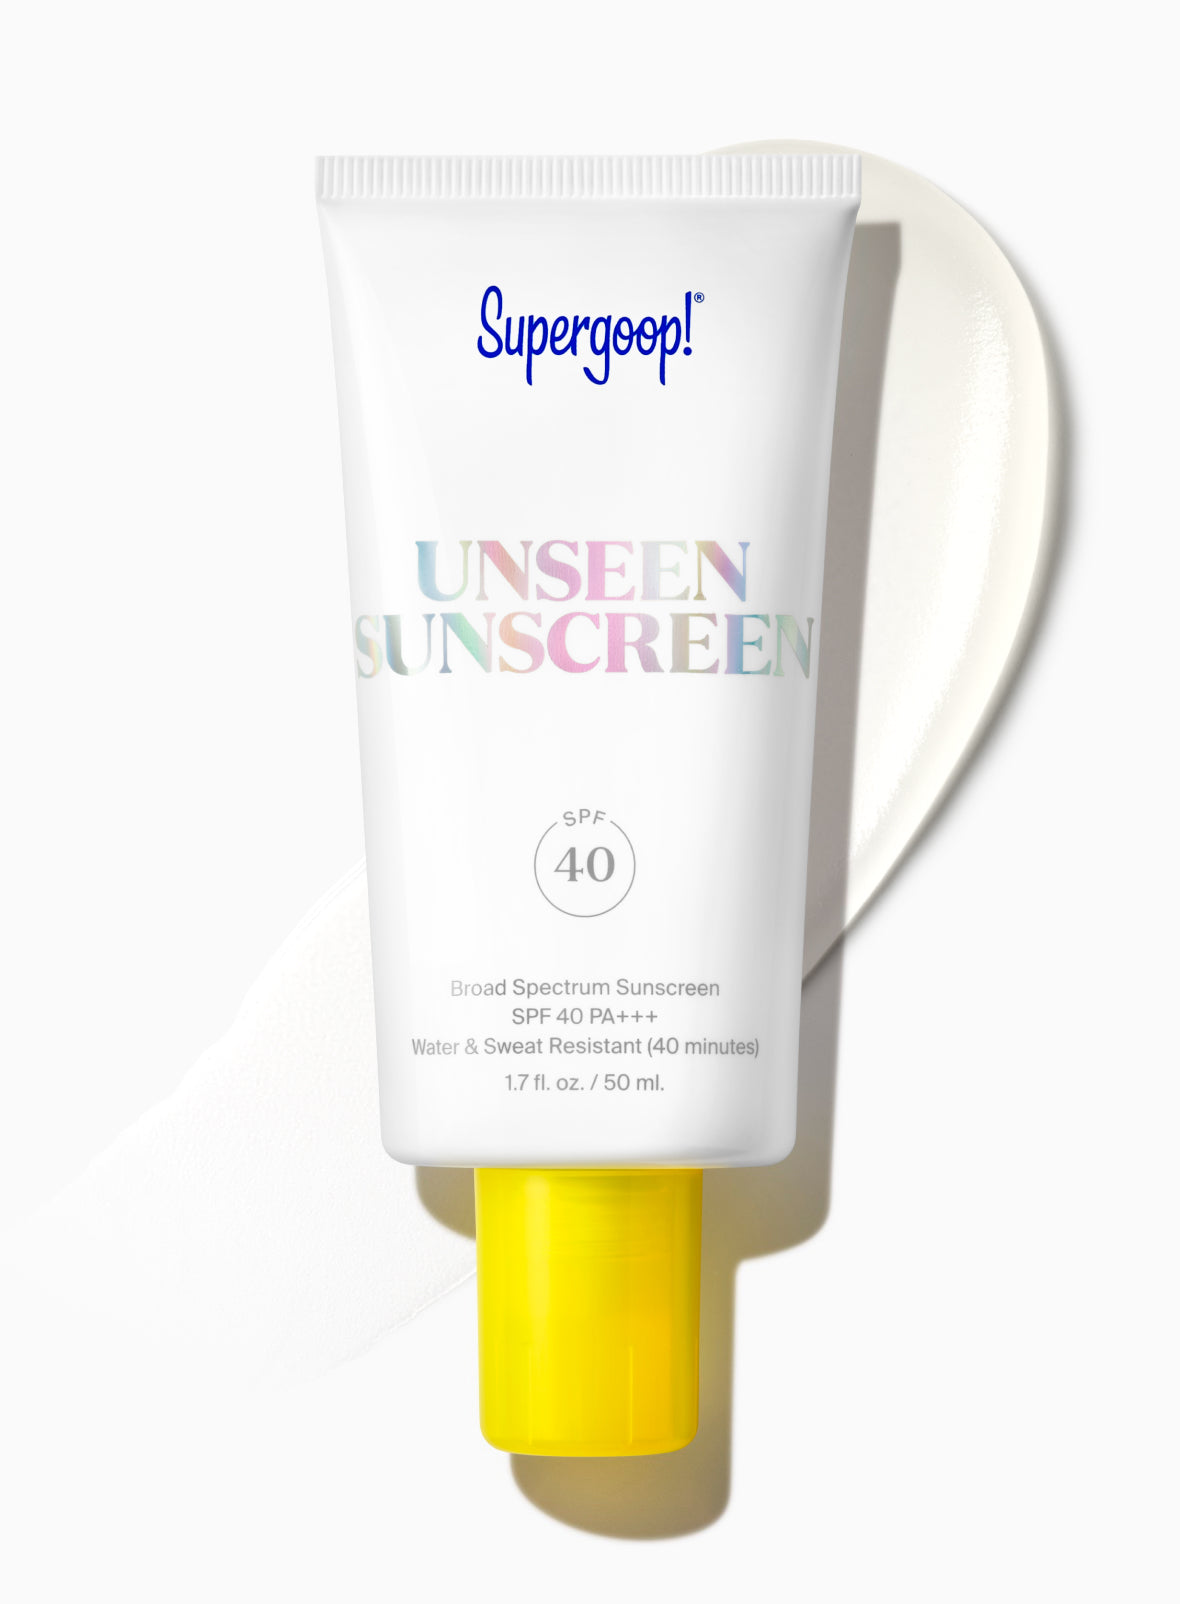 Sun Care] Neutrogena Ultra Sheer Dry Touch sunscreen SPF 70 is very watery  : r/SkincareAddiction